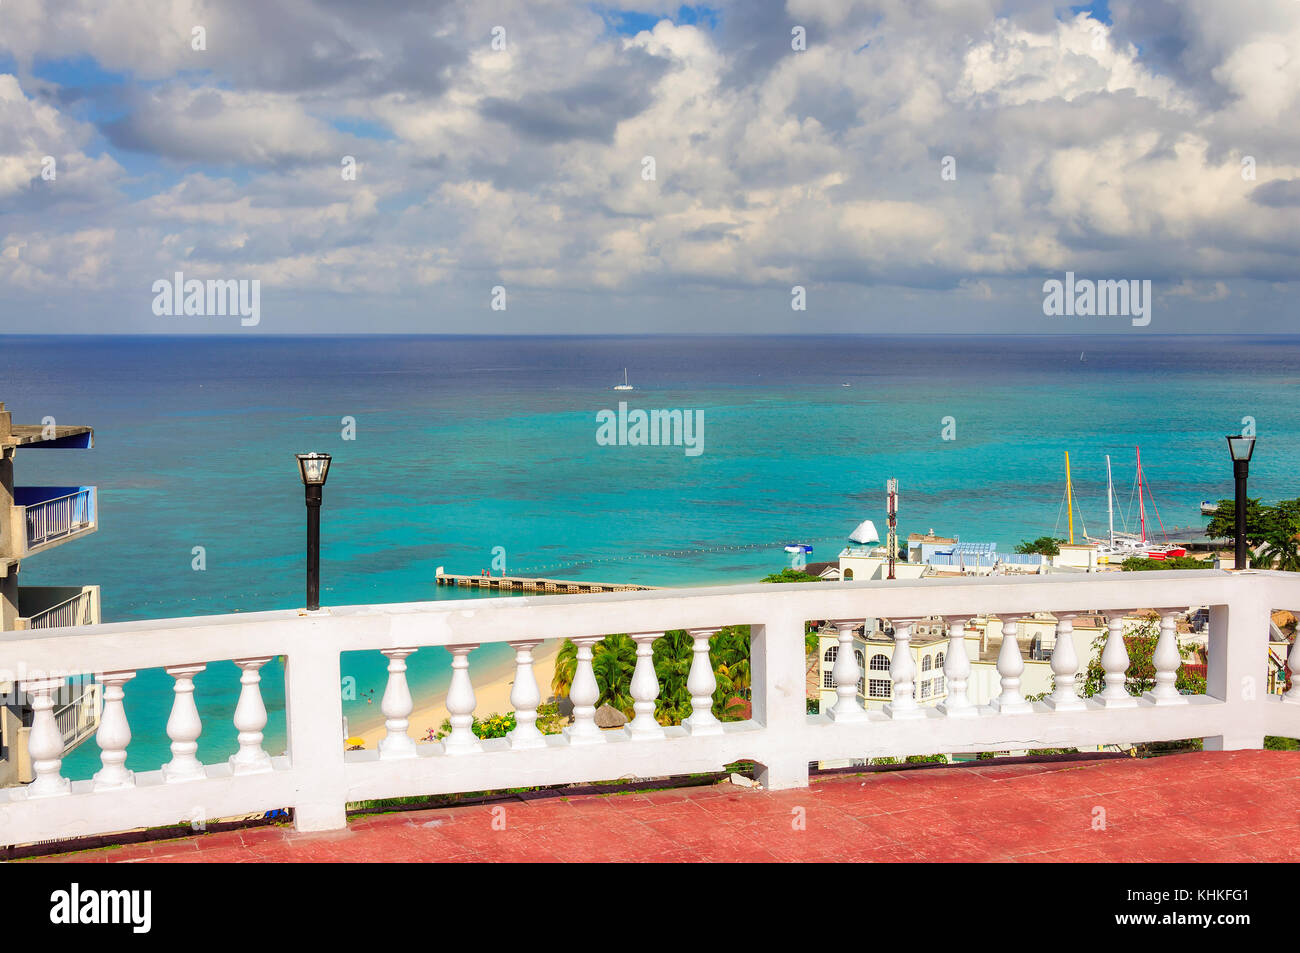 Montego Bay, Jamaïque - belle vue sur mer des Caraïbes Banque D'Images